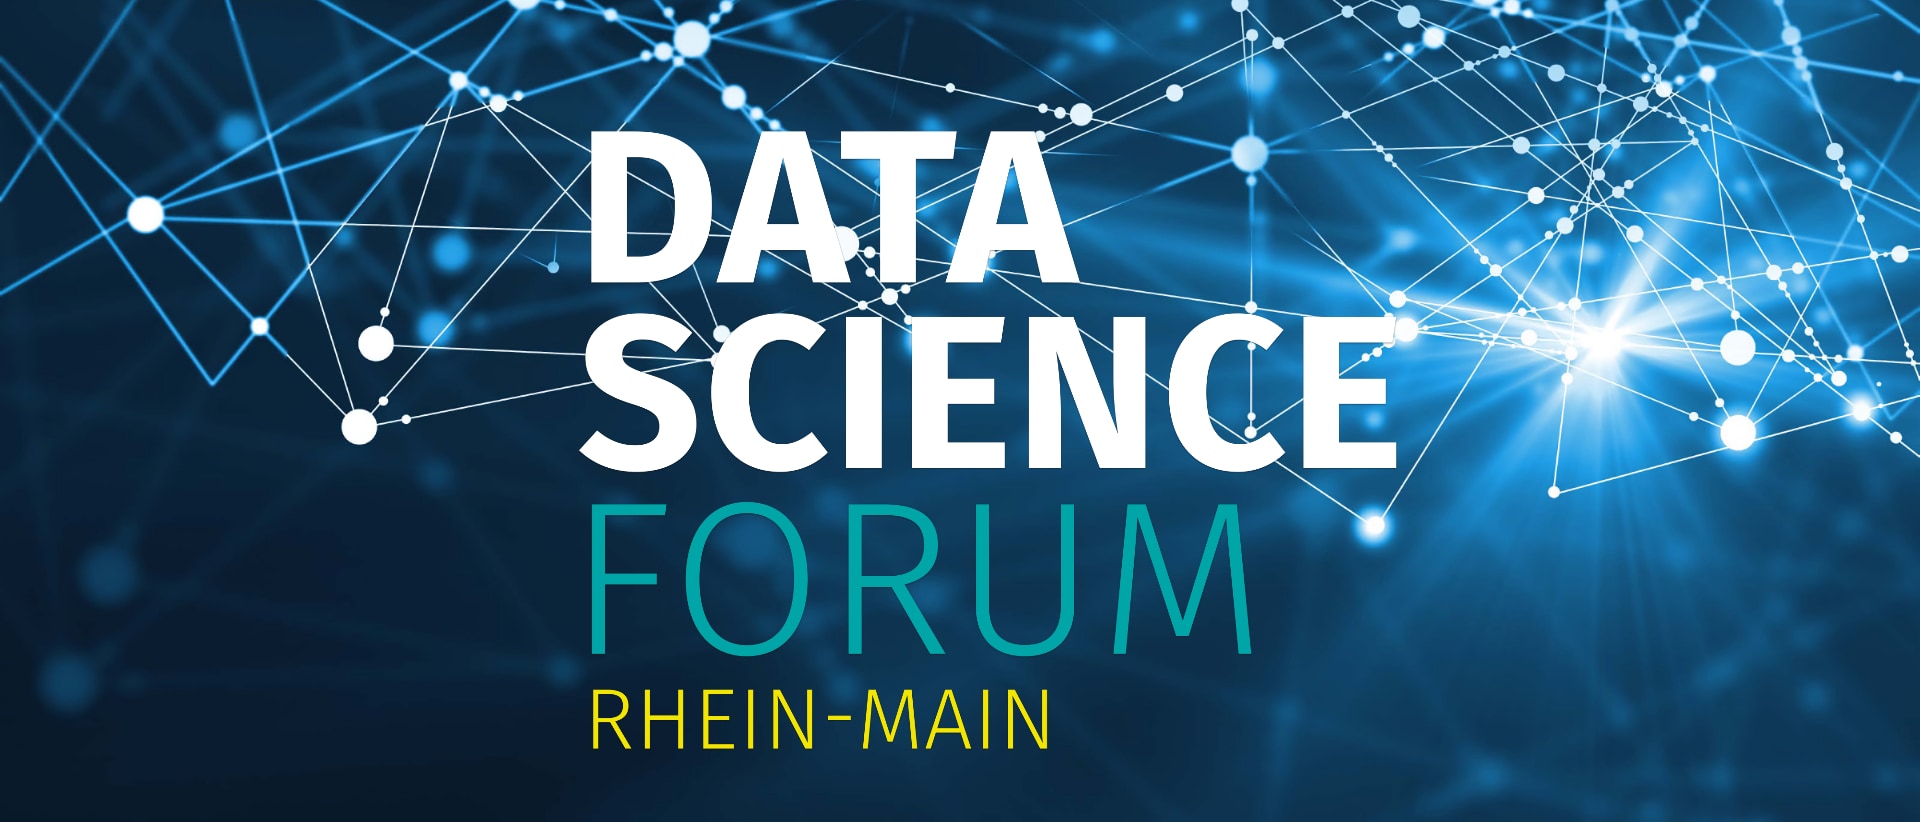 Data Science Forum Rhein-Main